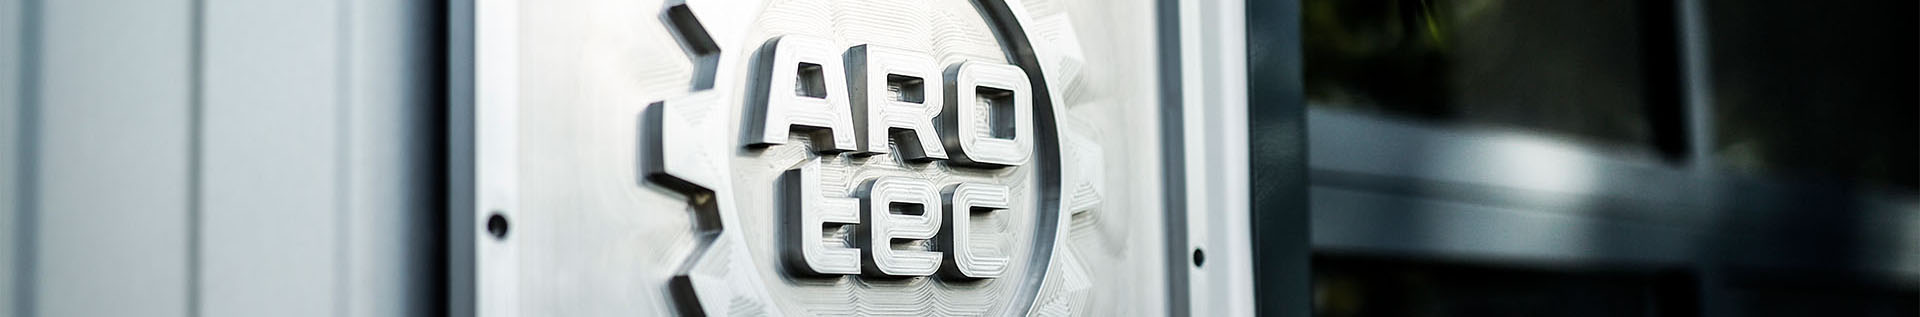 ARO-tec GmbH